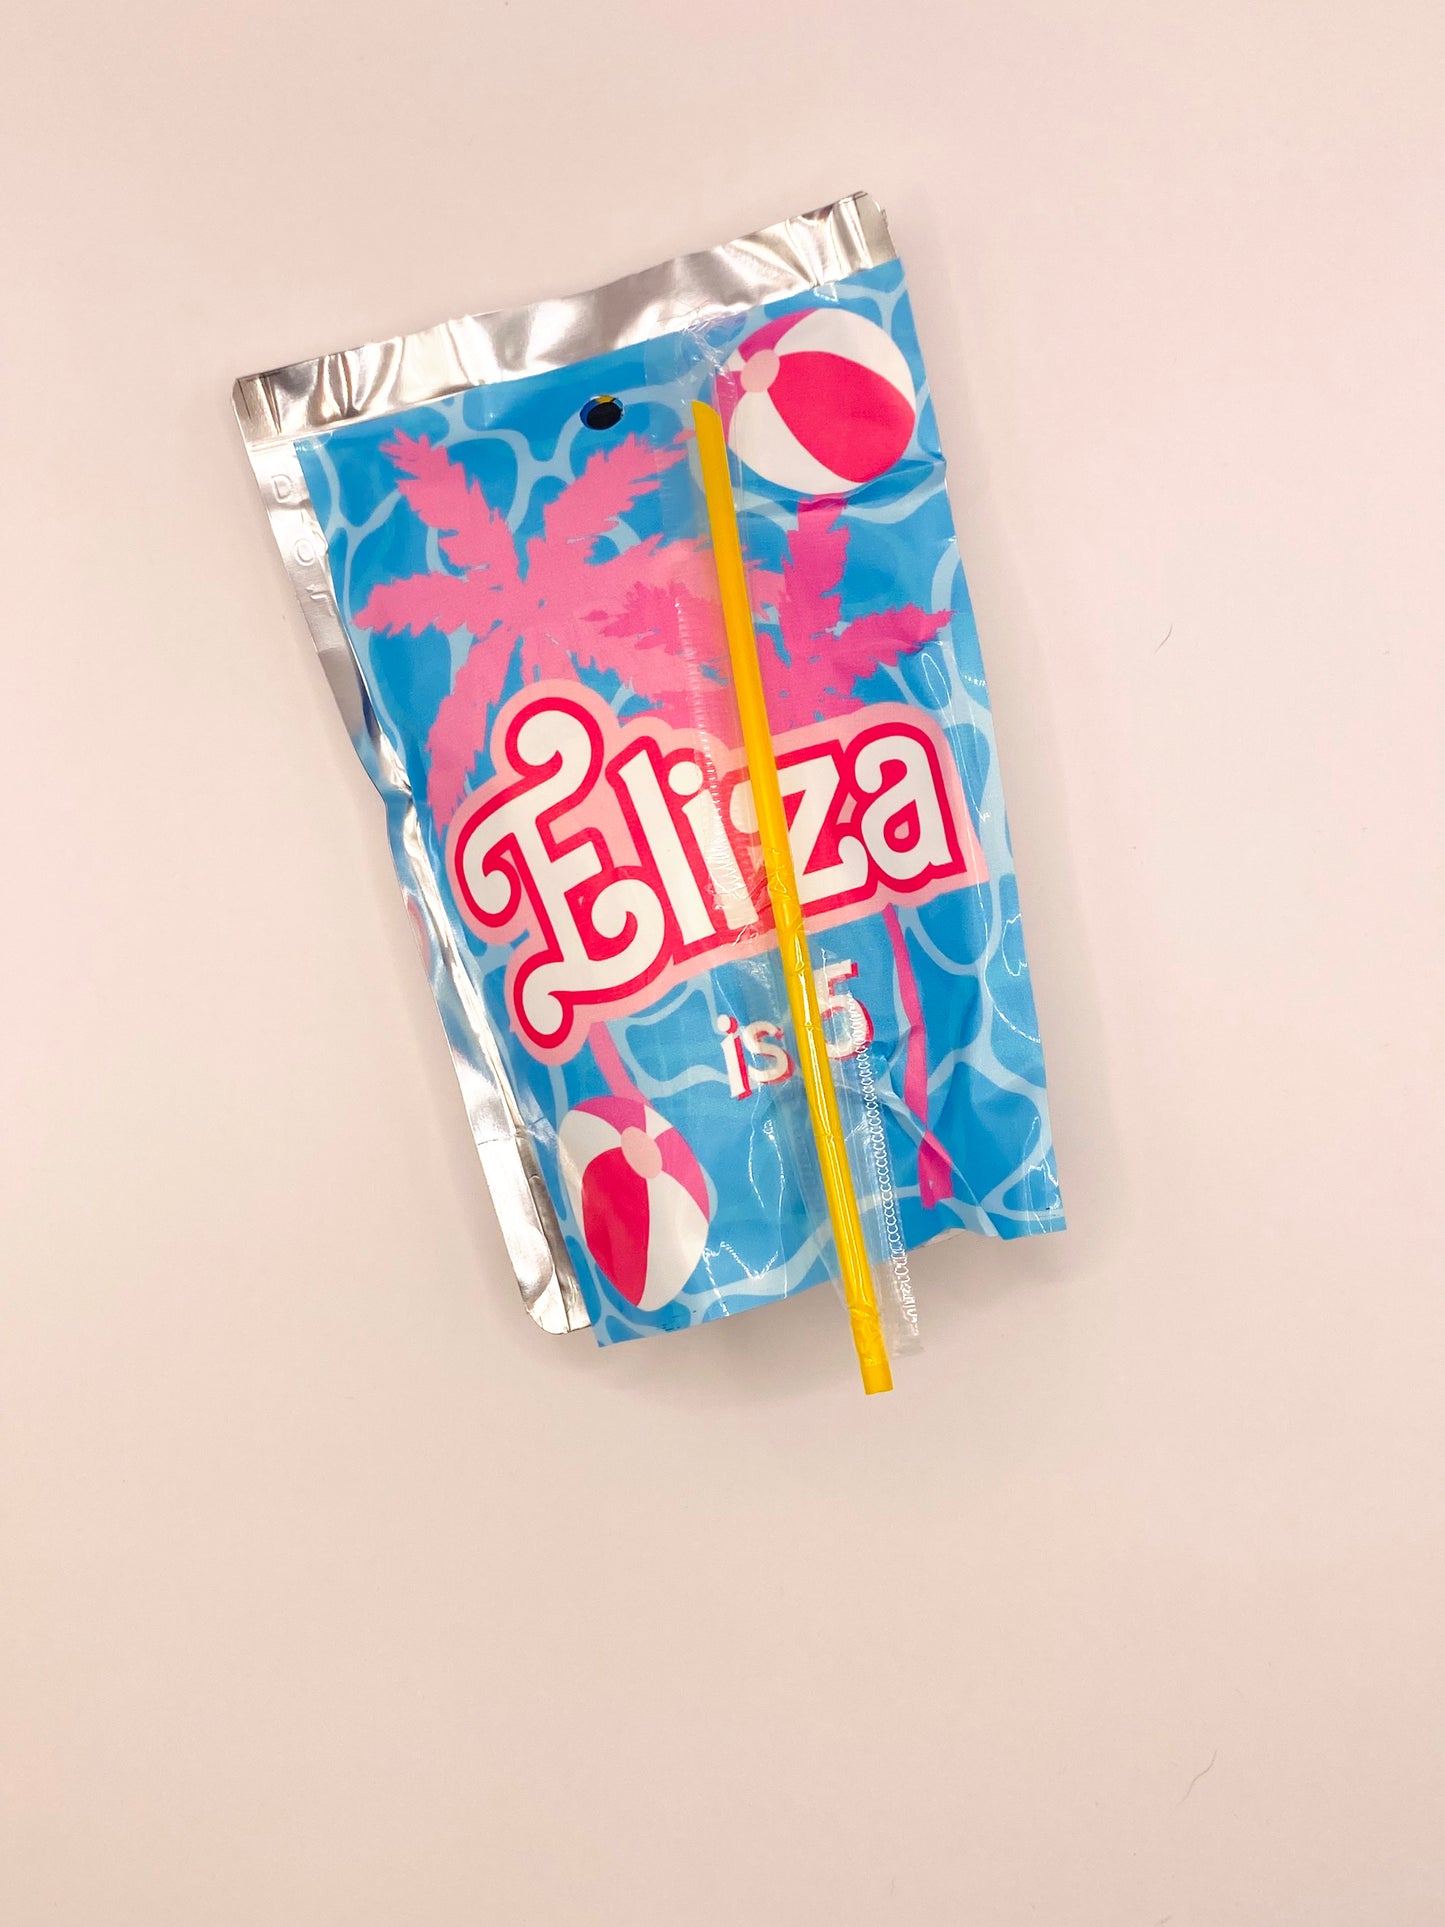 Printed Capri Sun Labels: Girly Pink Glitter, Blue Malibu